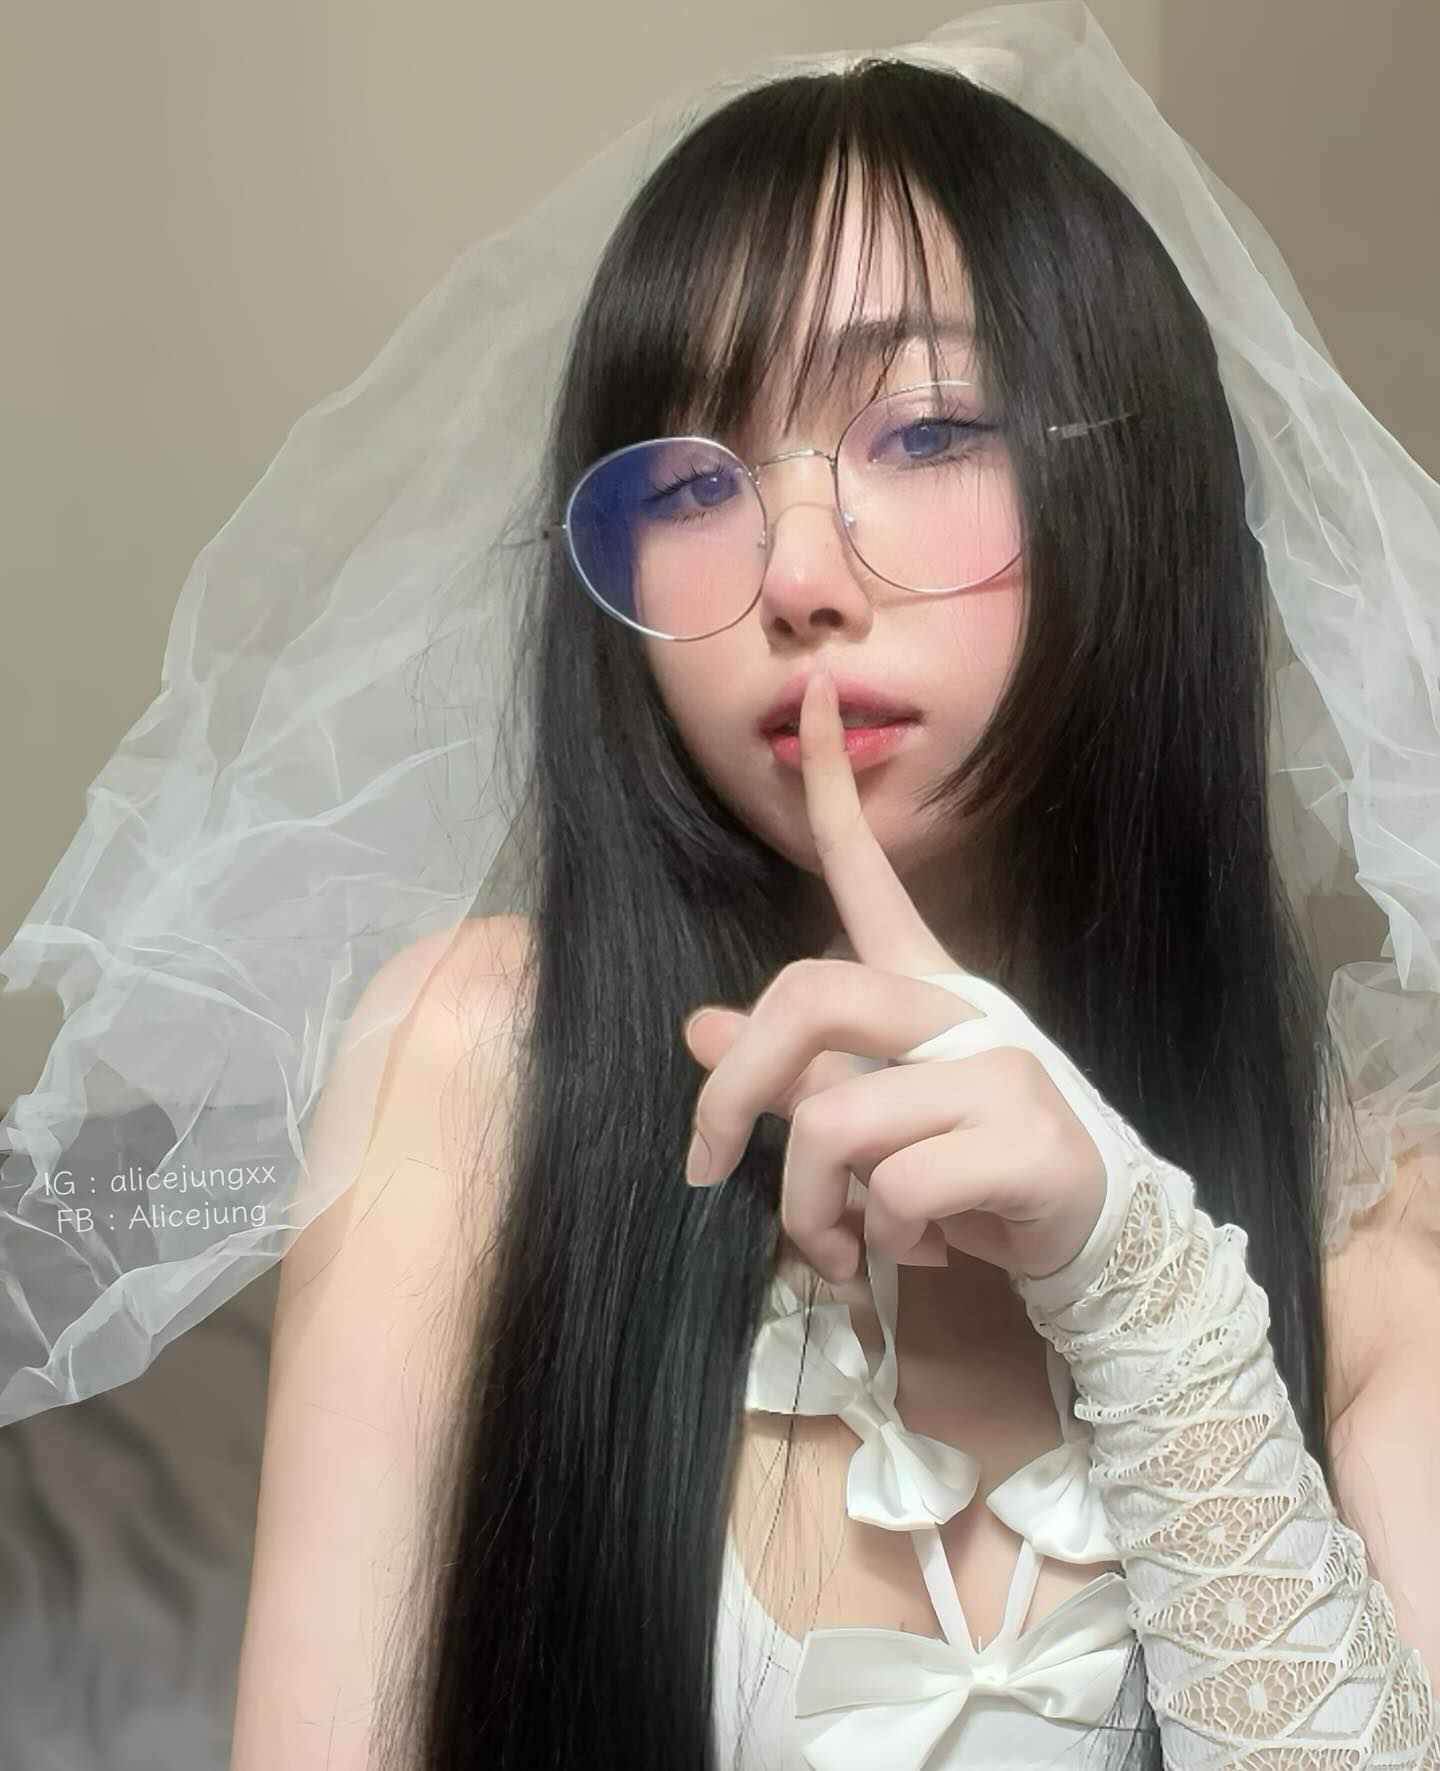 👰🏻‍♀️💍

🎀
…………
#bride #glasses #cute #kawaiigirl #style